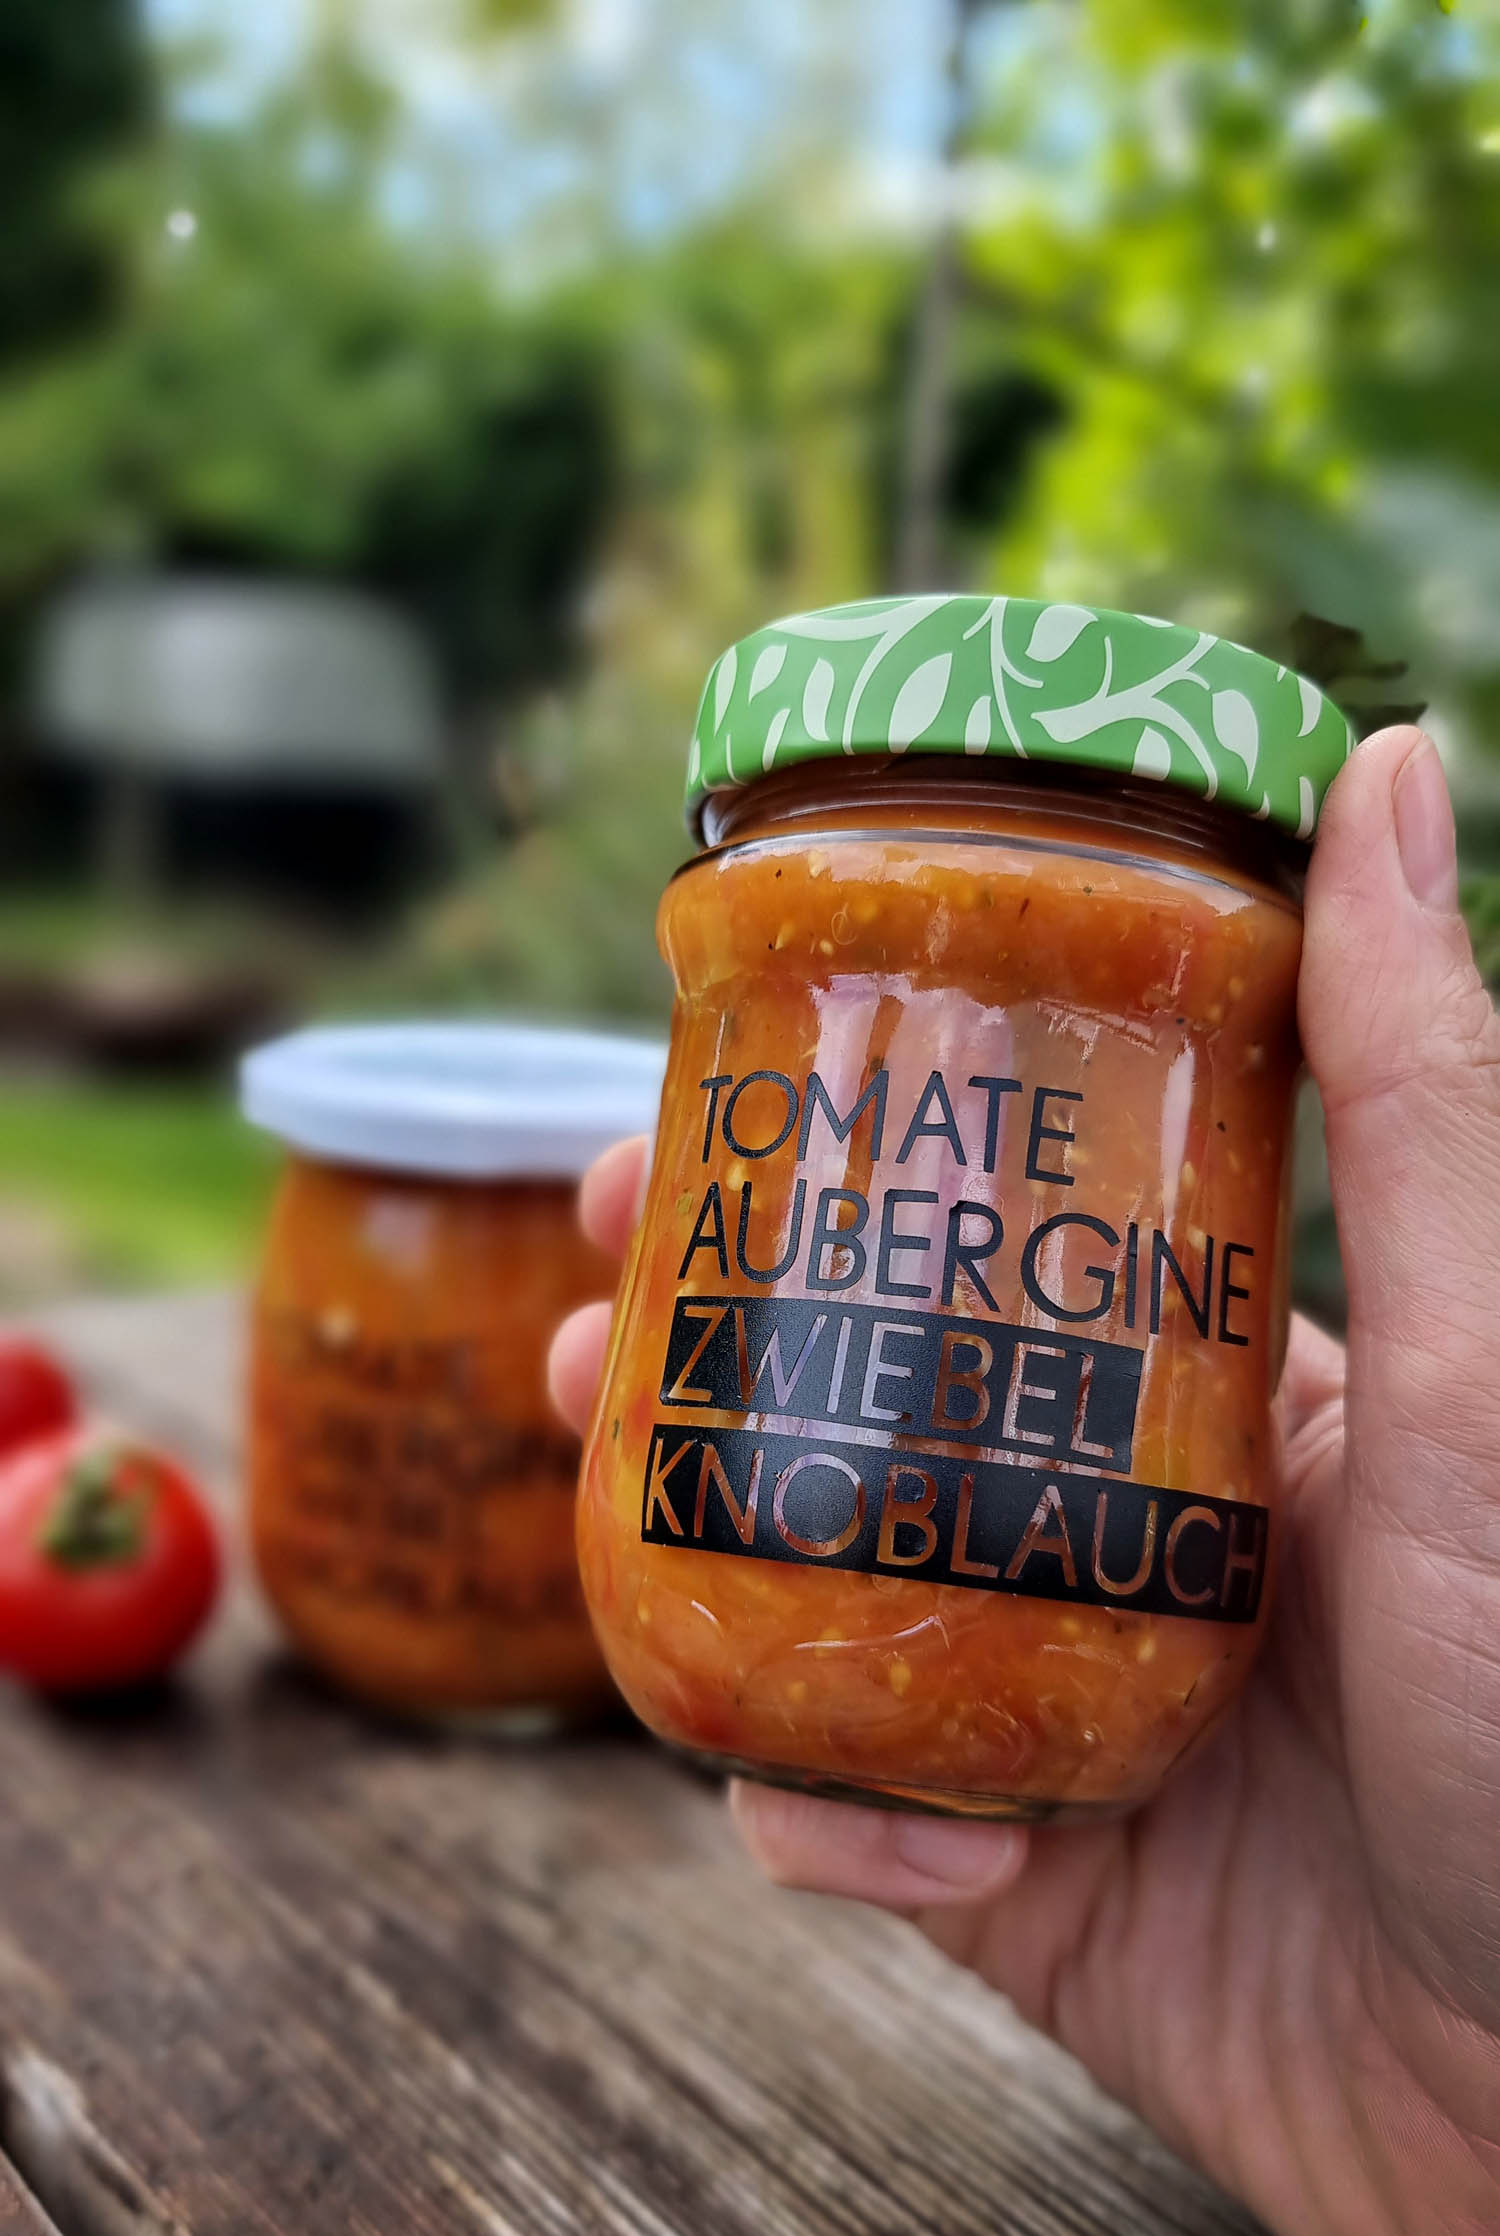 Tomate Aubergine Zwiebel Knoblauch Sugo